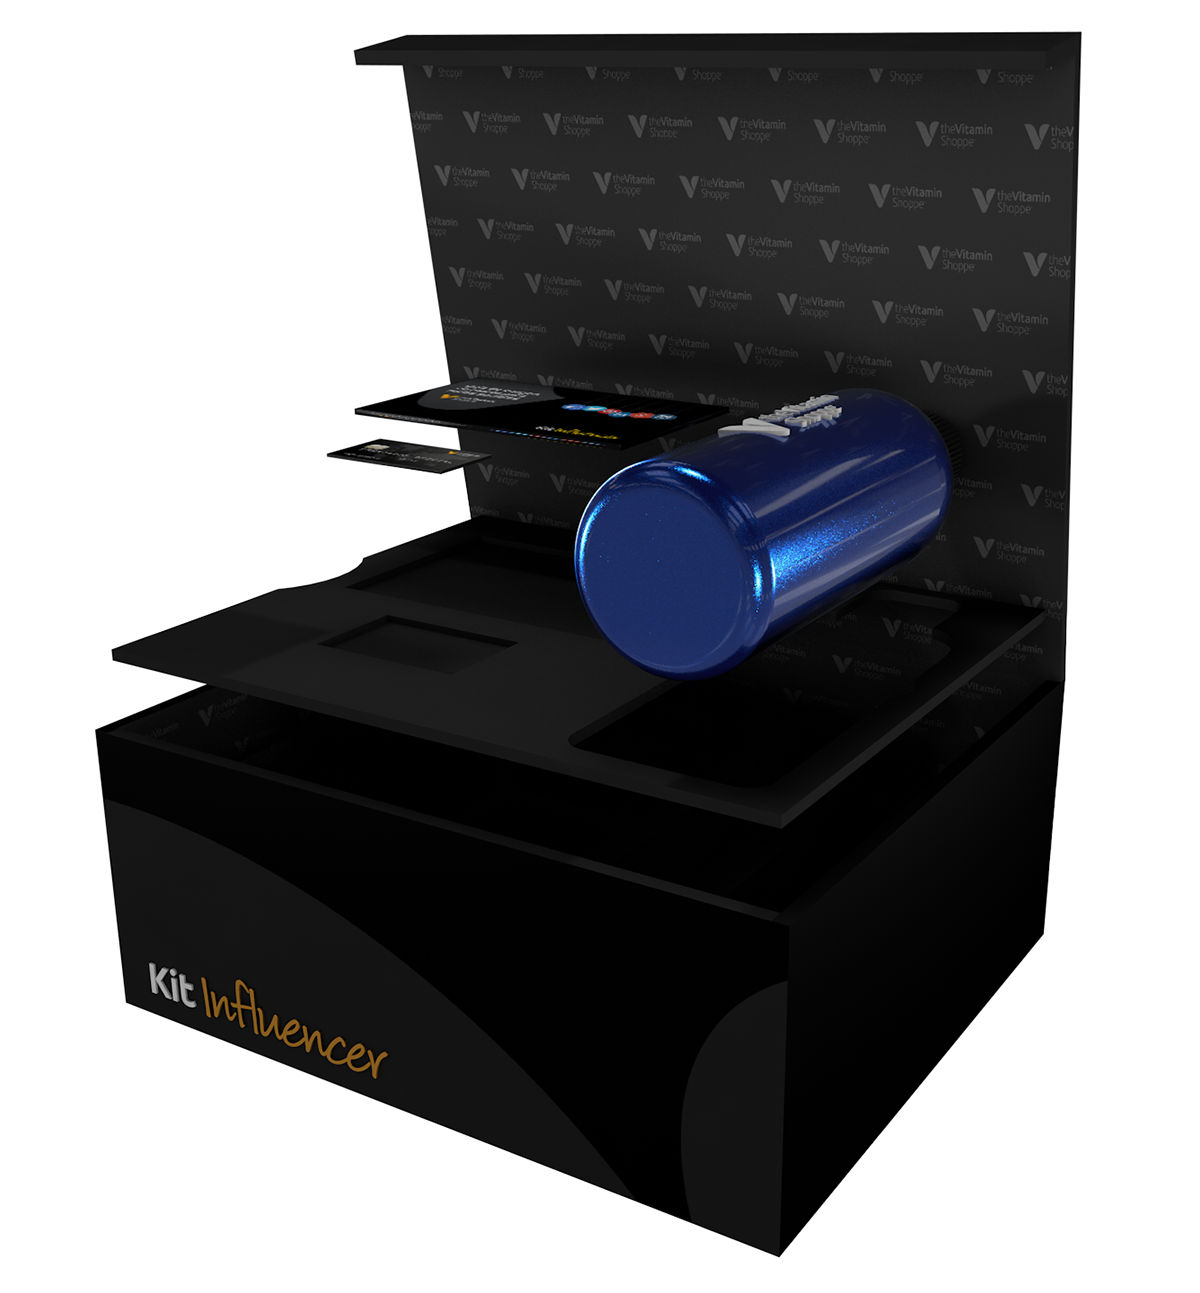 The Vitamin Shoppe INFLUENCER kit box Blackwood Packaging giveaways